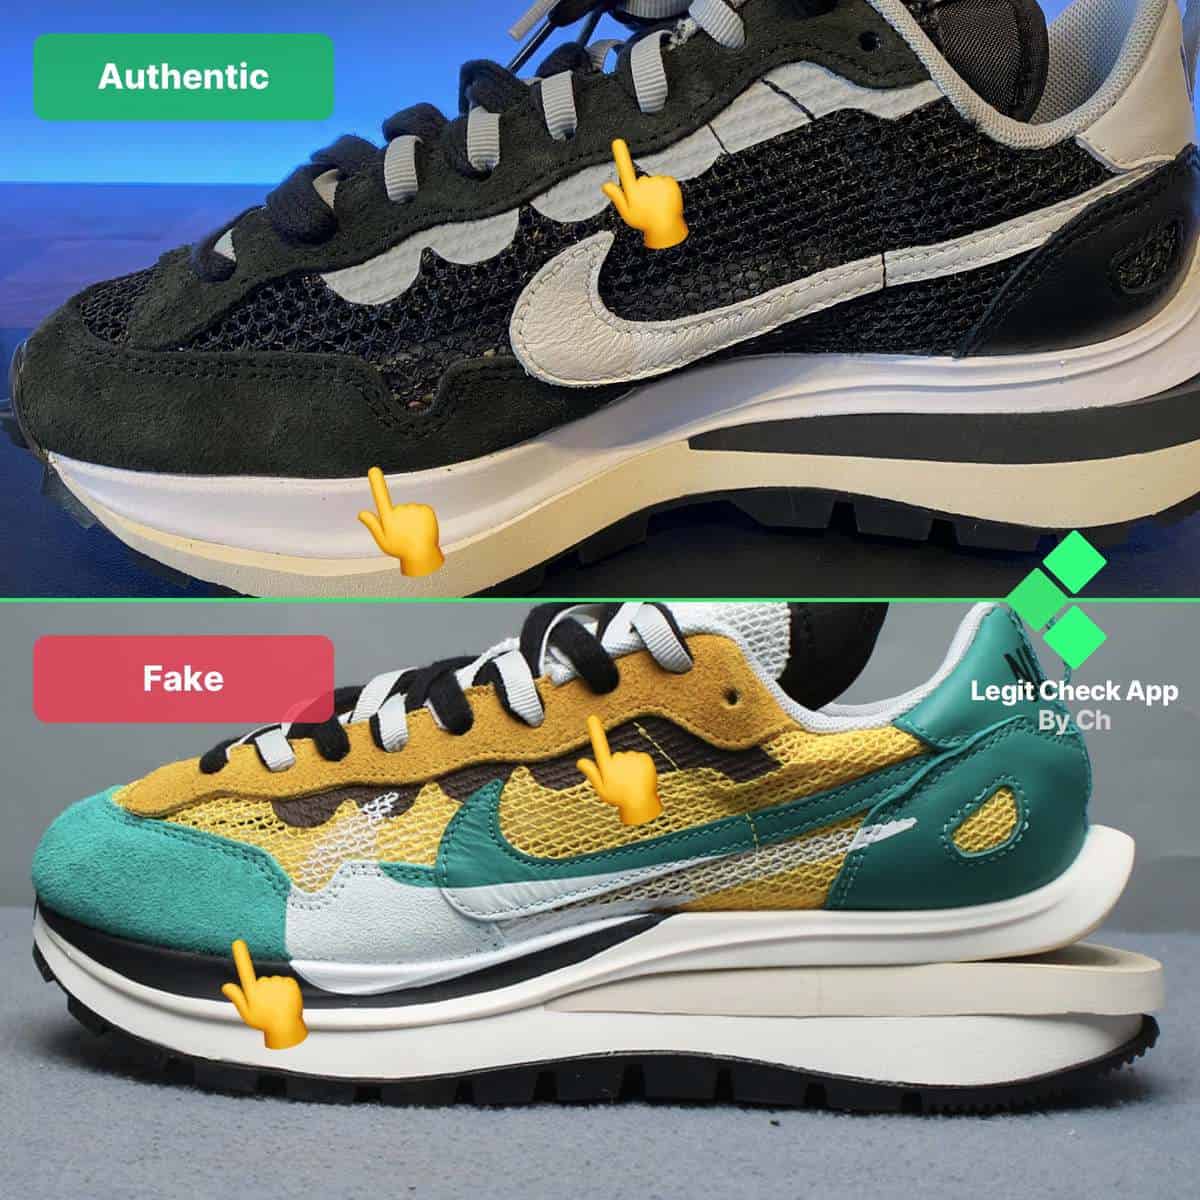 Nike Sacai Vaporwaffle Fake Vs Real (Authenticity Check Guide 